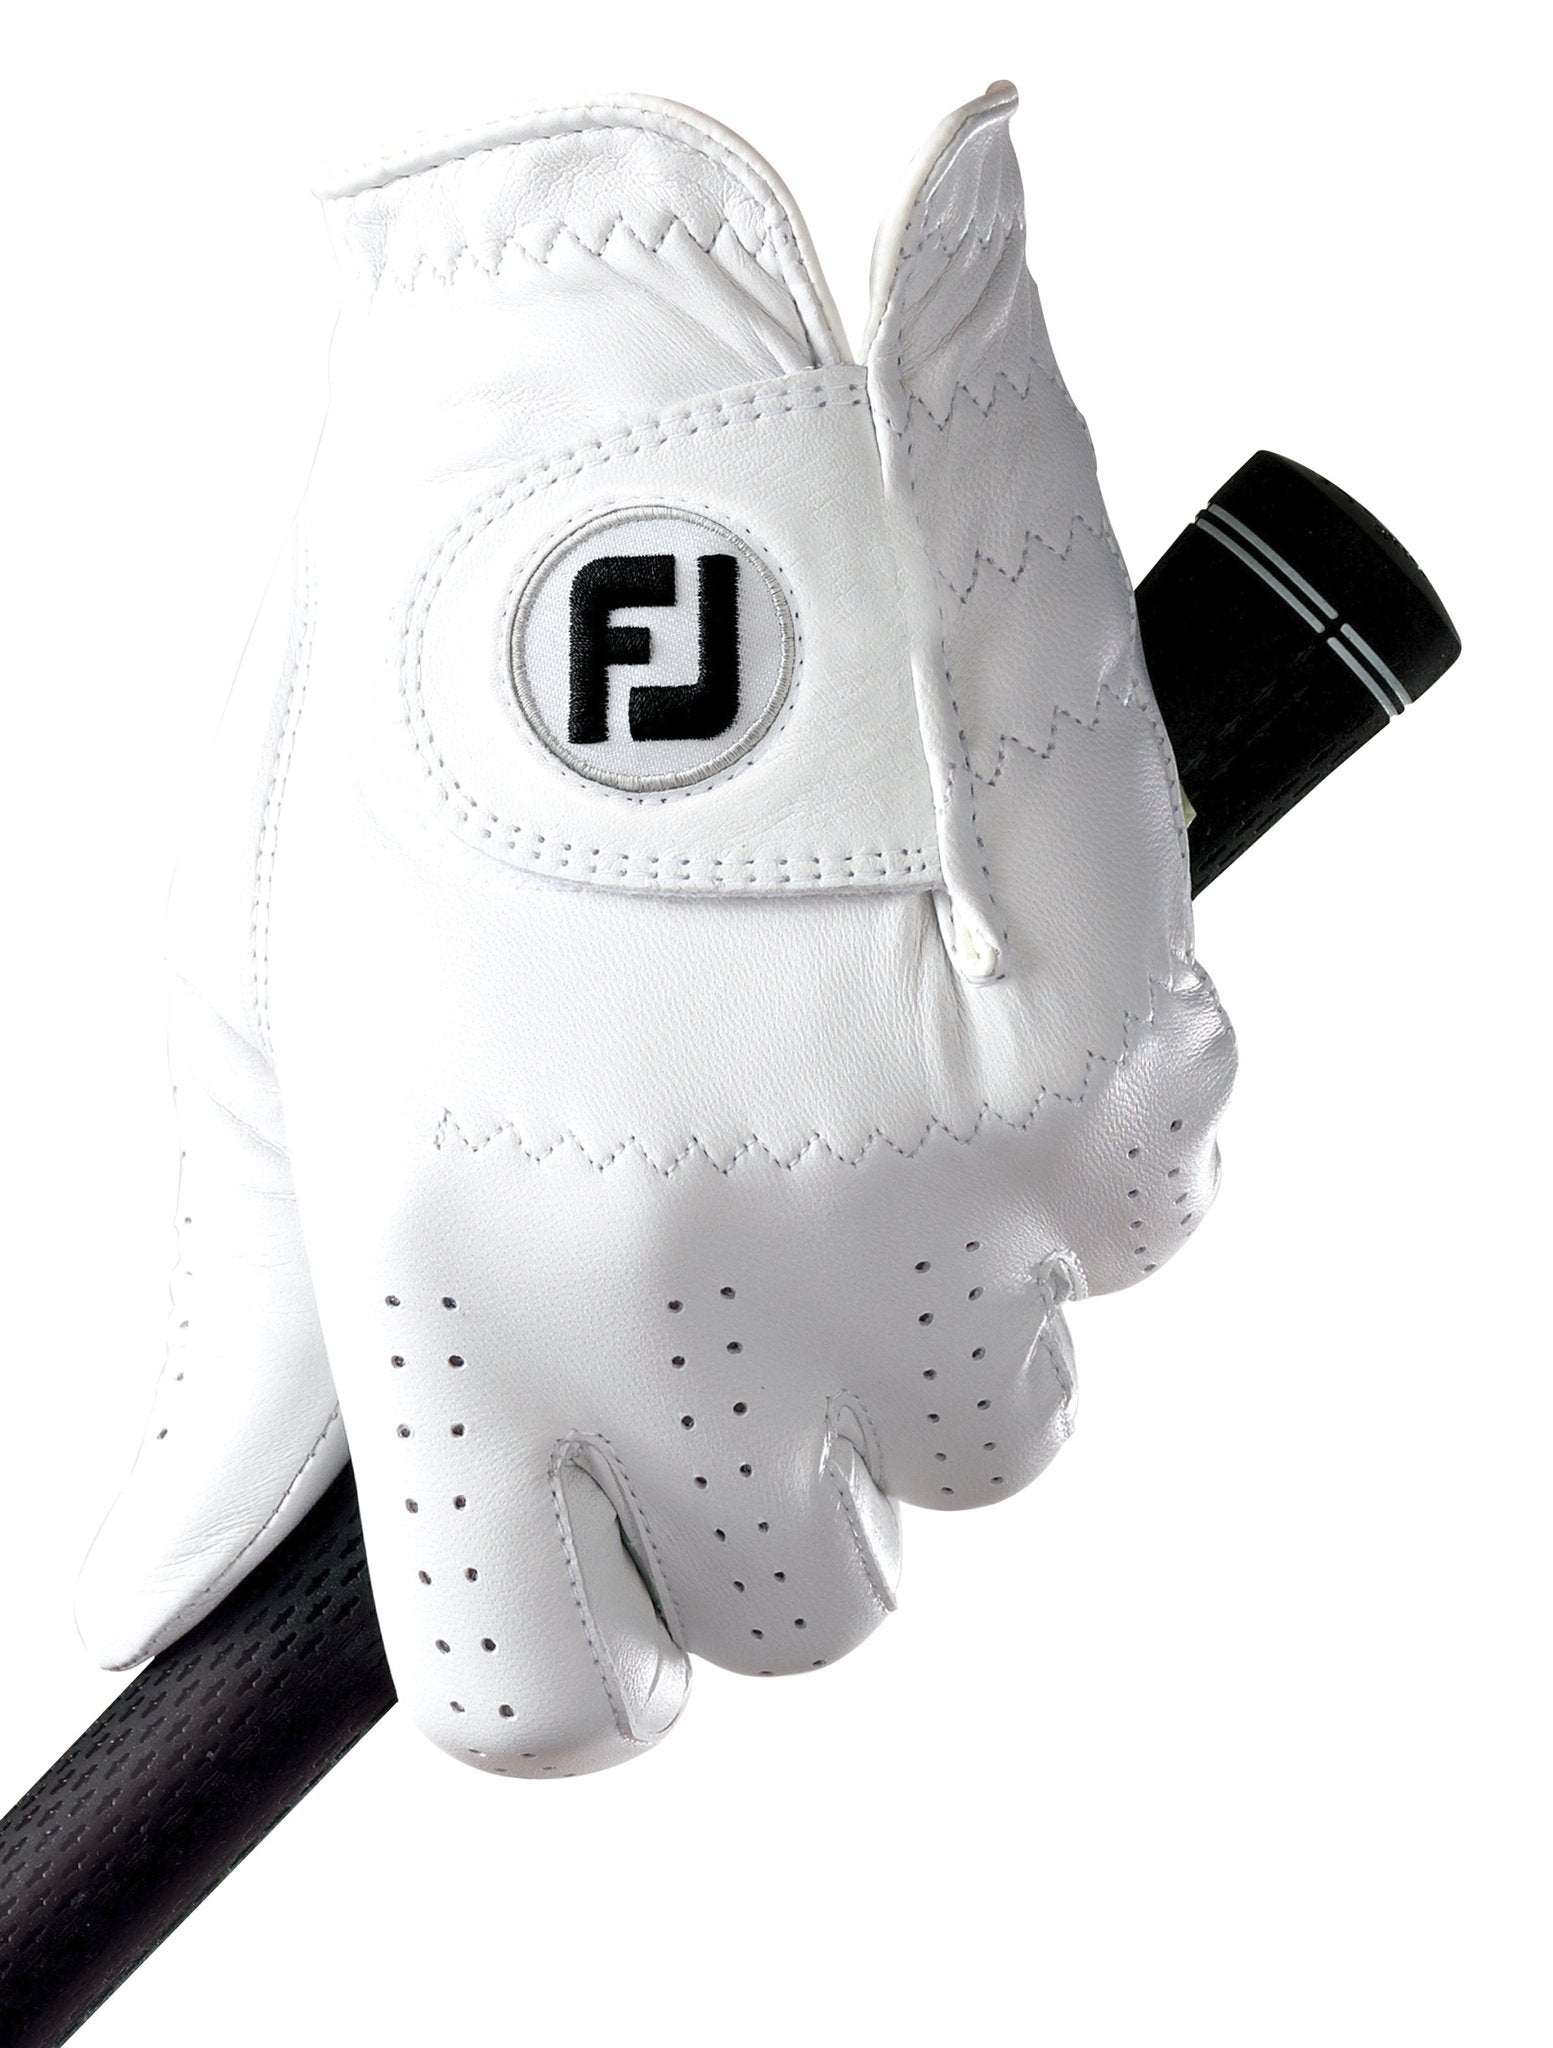 FootJoy Cabrettasof White Golf Glove Right Hand | Evolution Golf  | FootJoy | Evolution Golf 